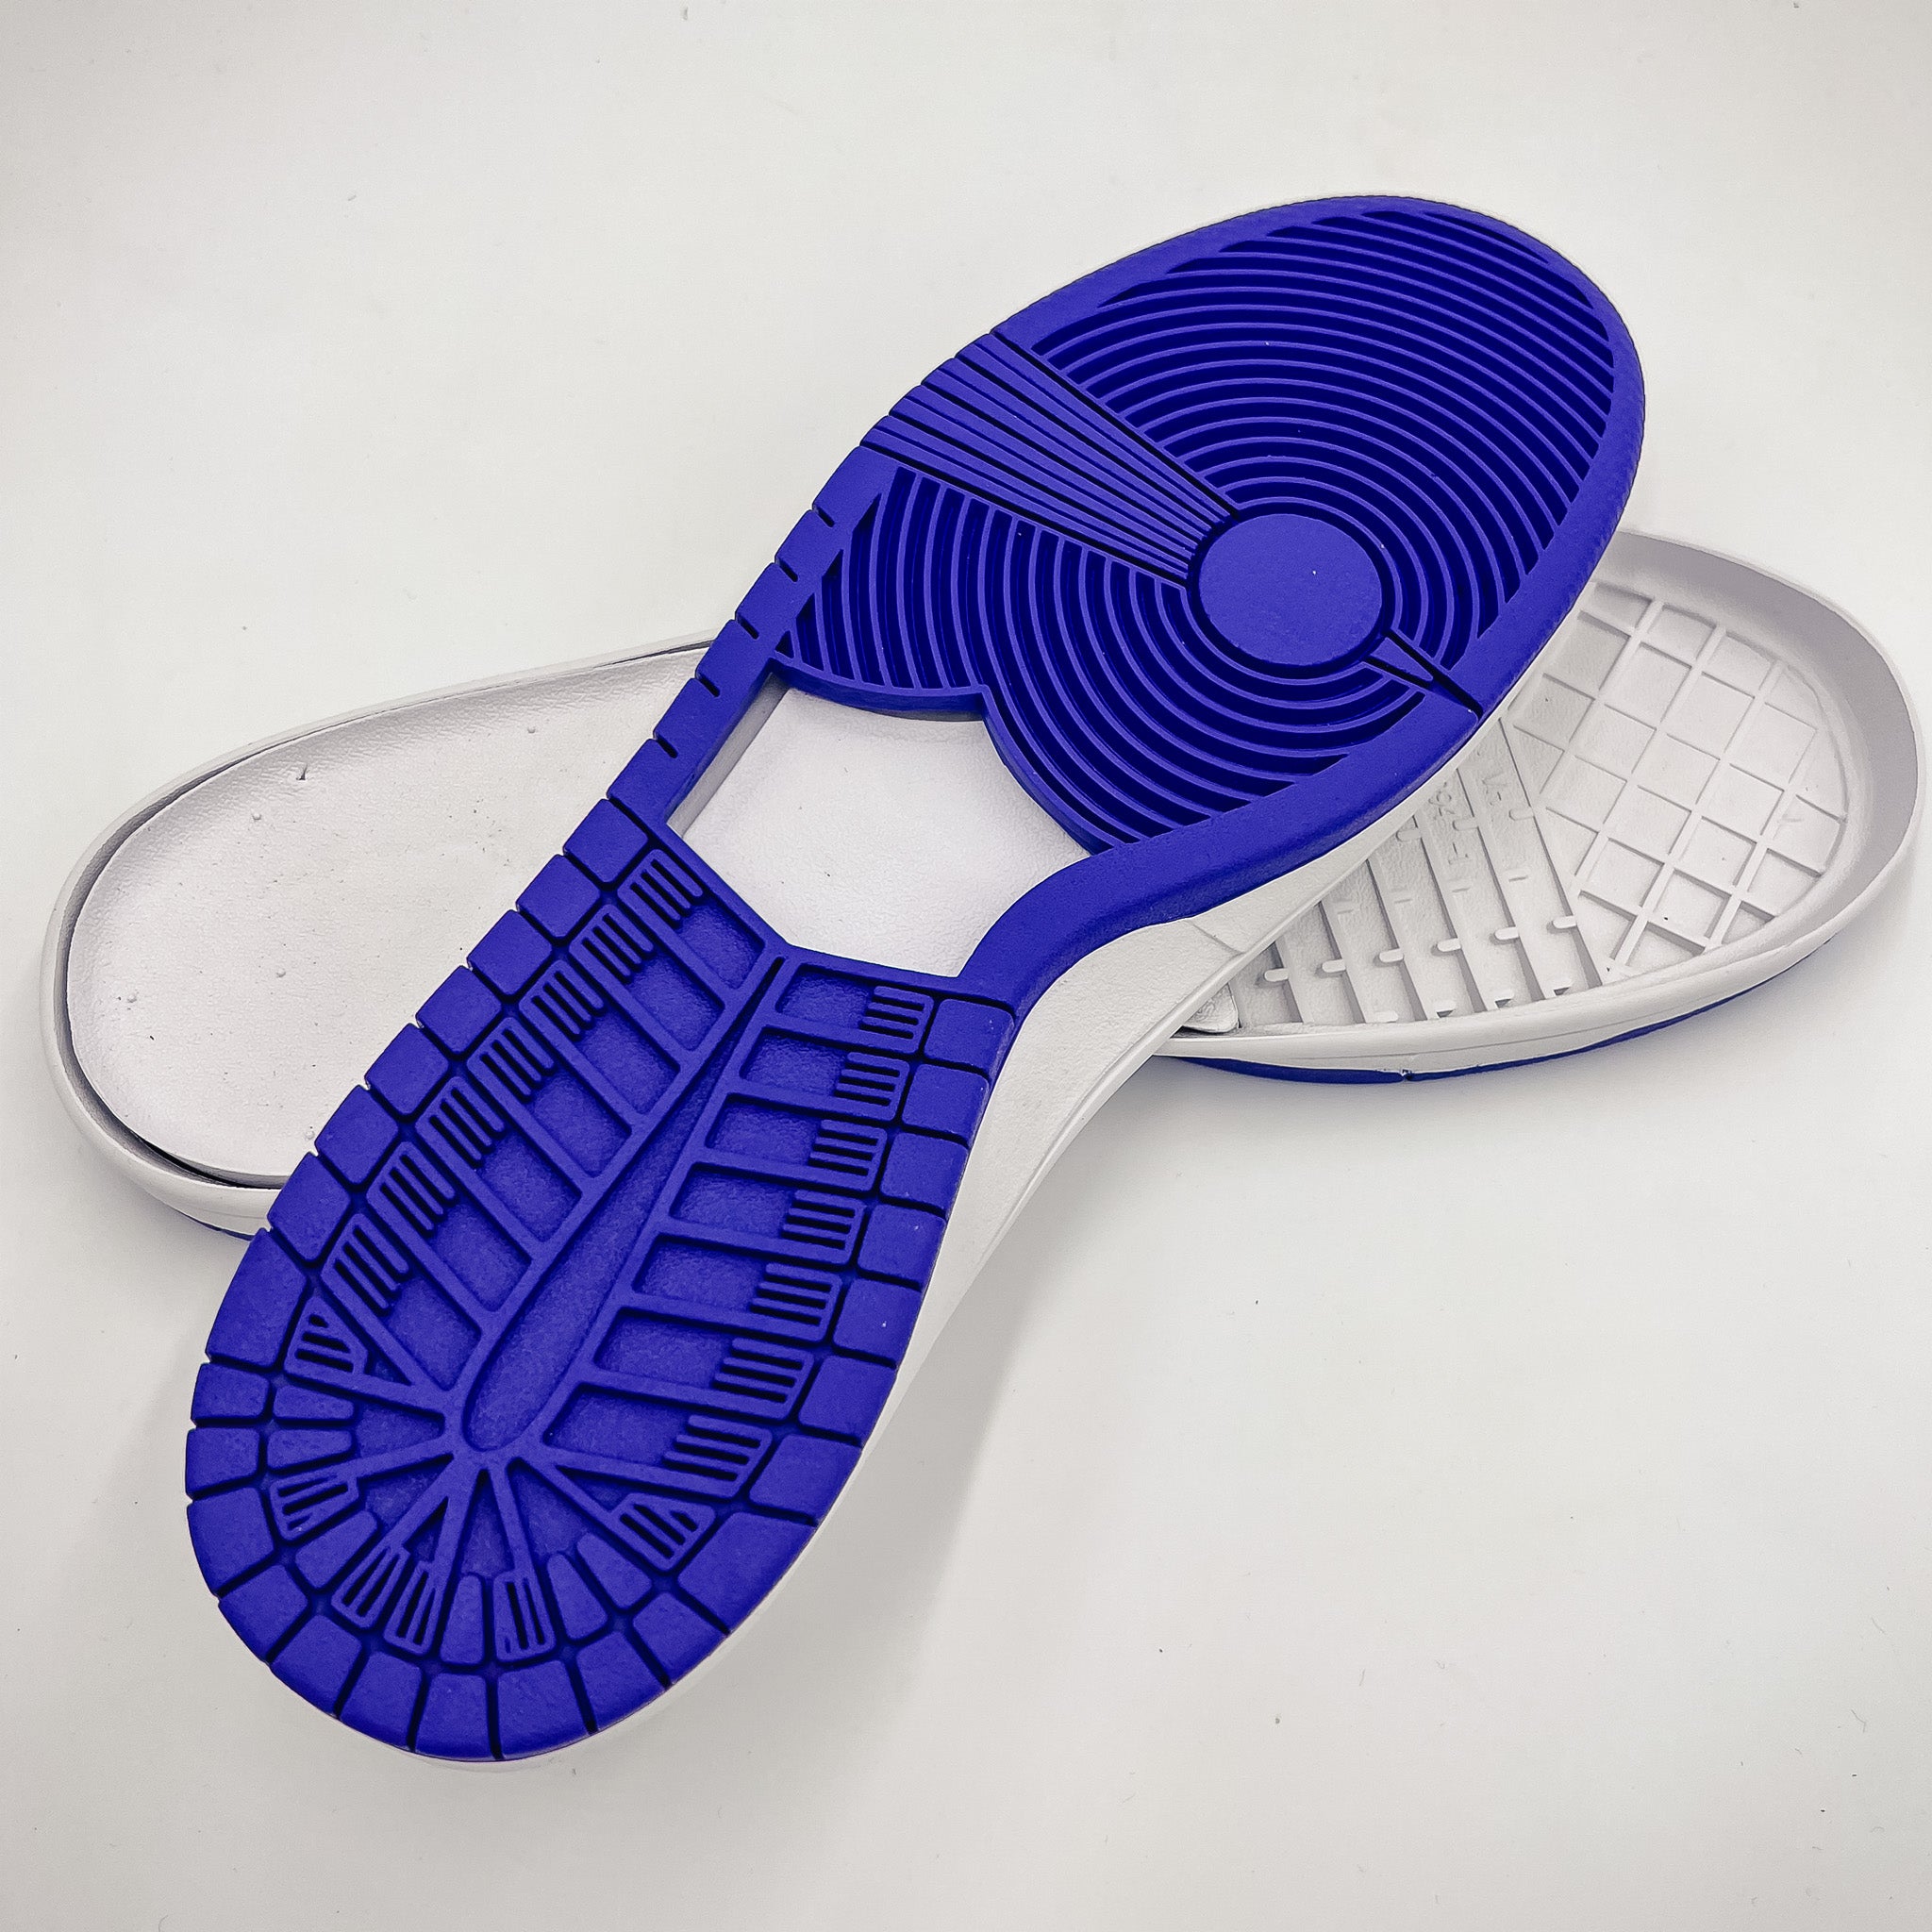 SkateBoard (SB Dunk) Shoe Soles, White/Purple